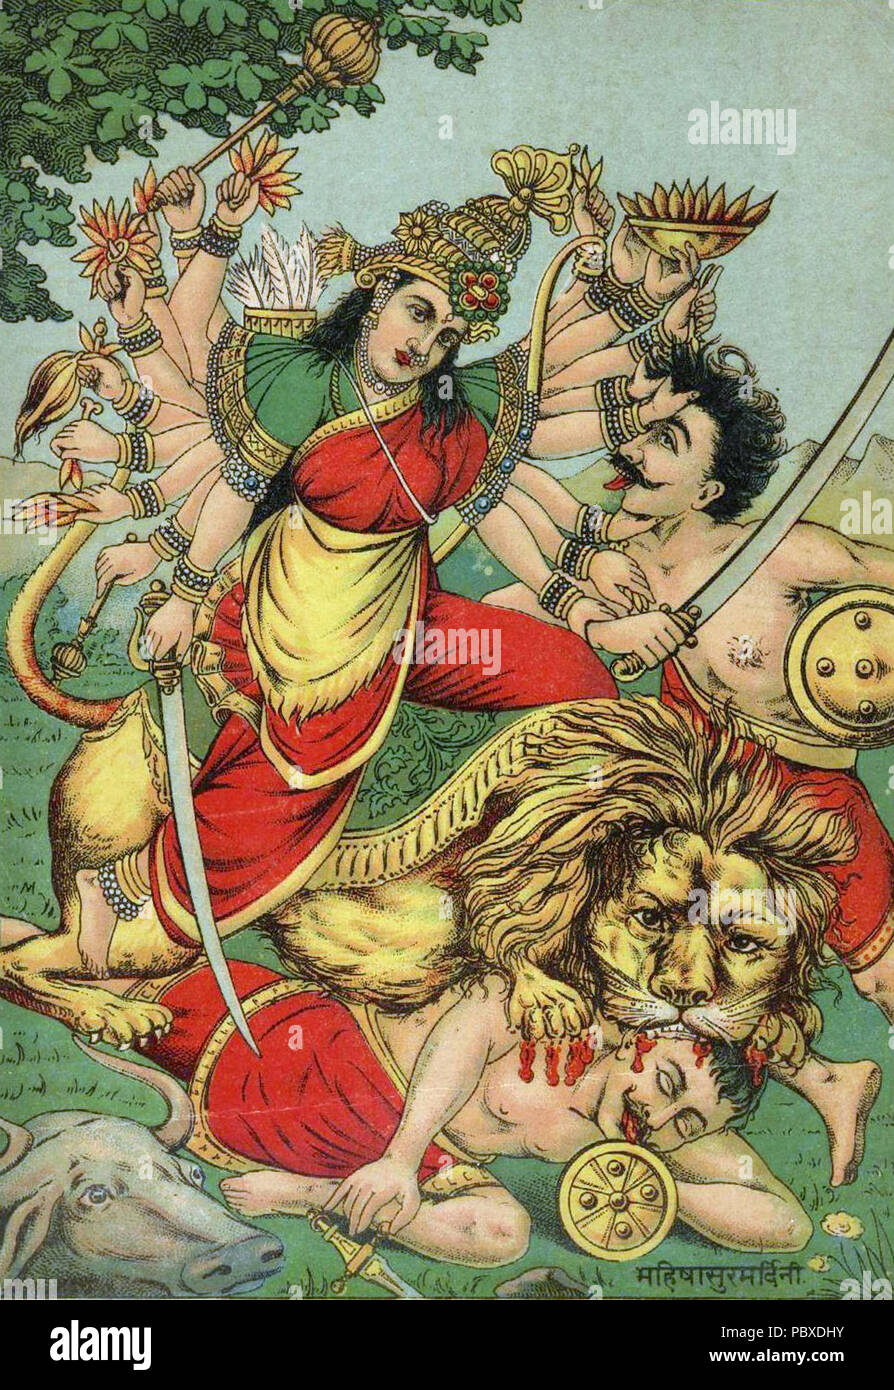 Durga mahishasura hi-res stock photography and images - Alamy